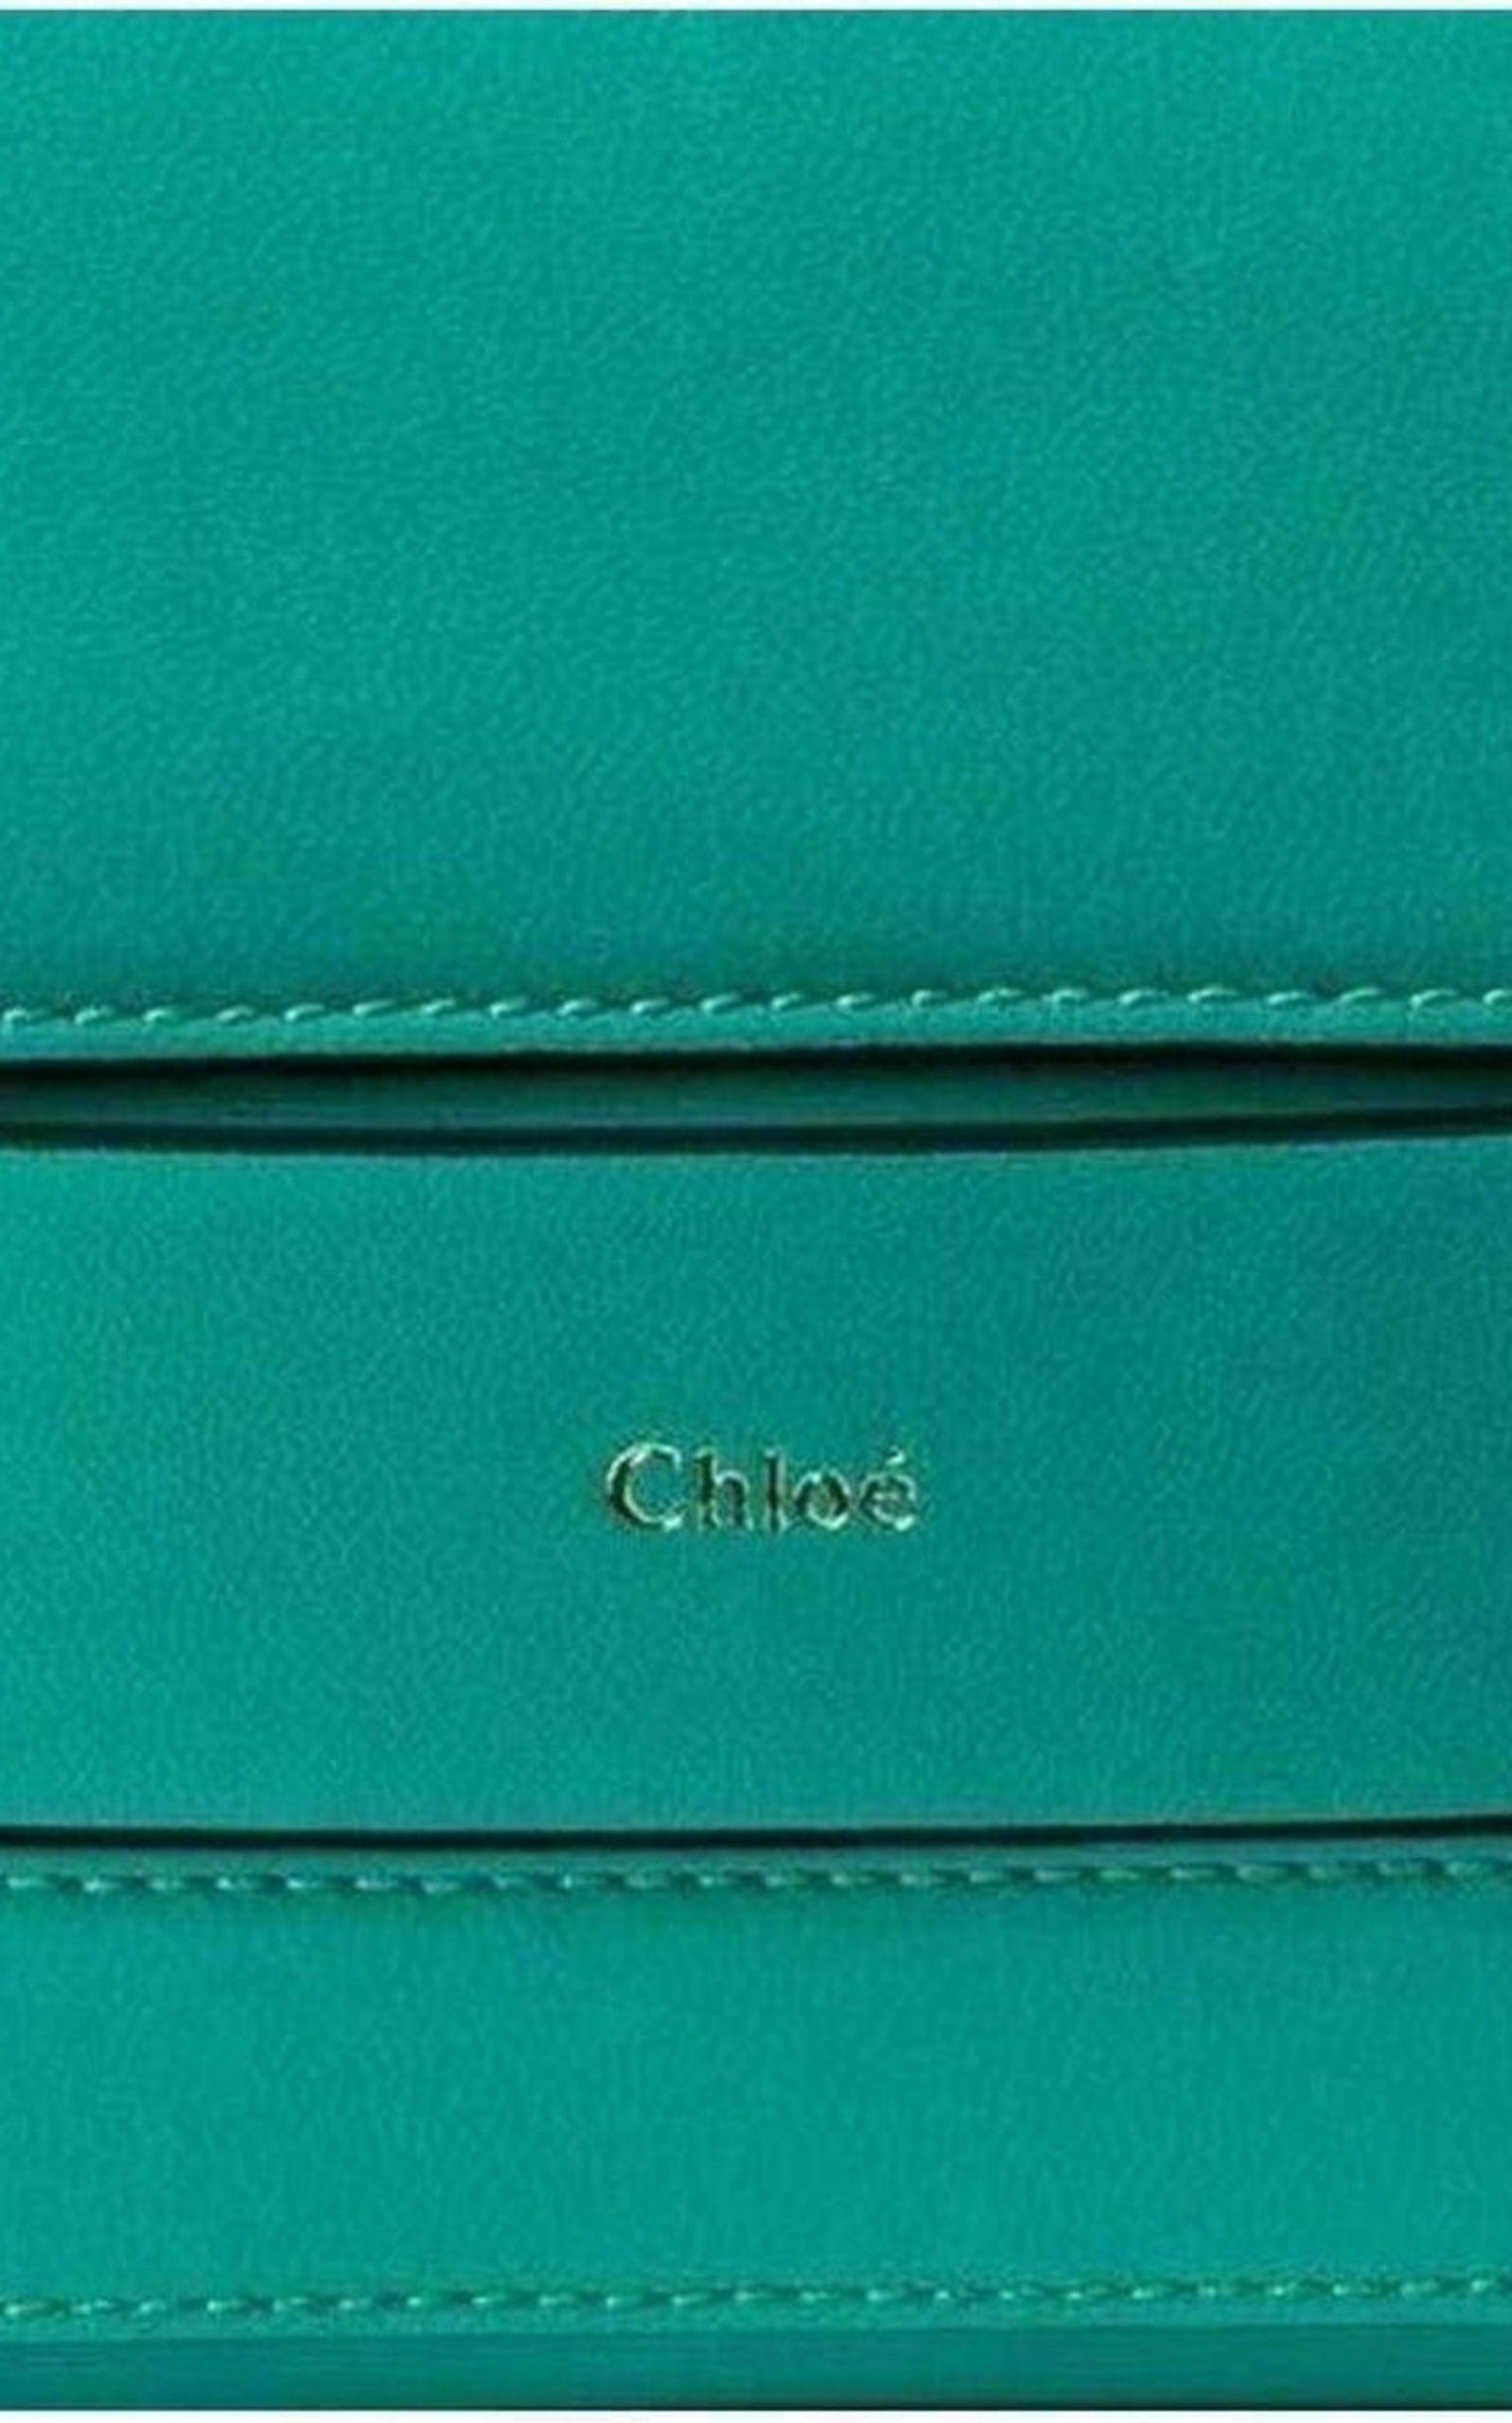  ChloeJade Green Leather Clutch - Runway Catalog